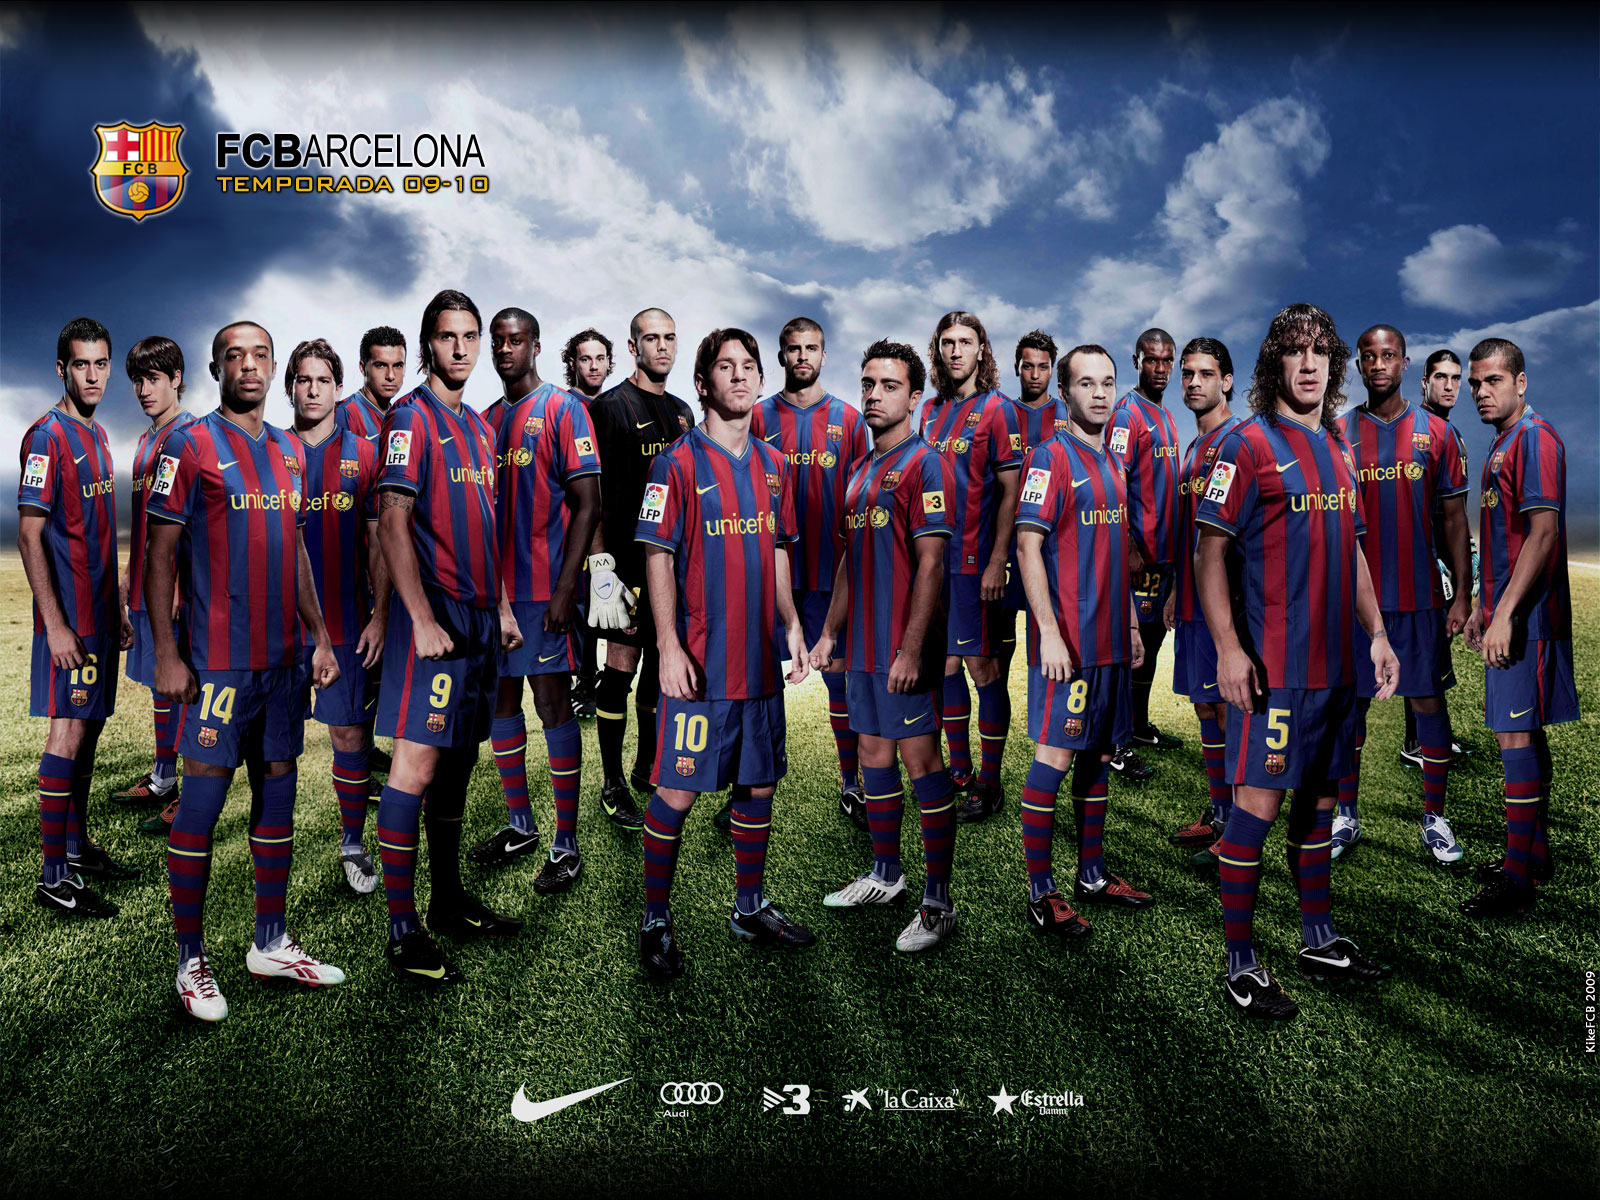 Cool Images Fc Barcelona Team Wallpapers Afalchi Free images wallpape [afalchi.blogspot.com]